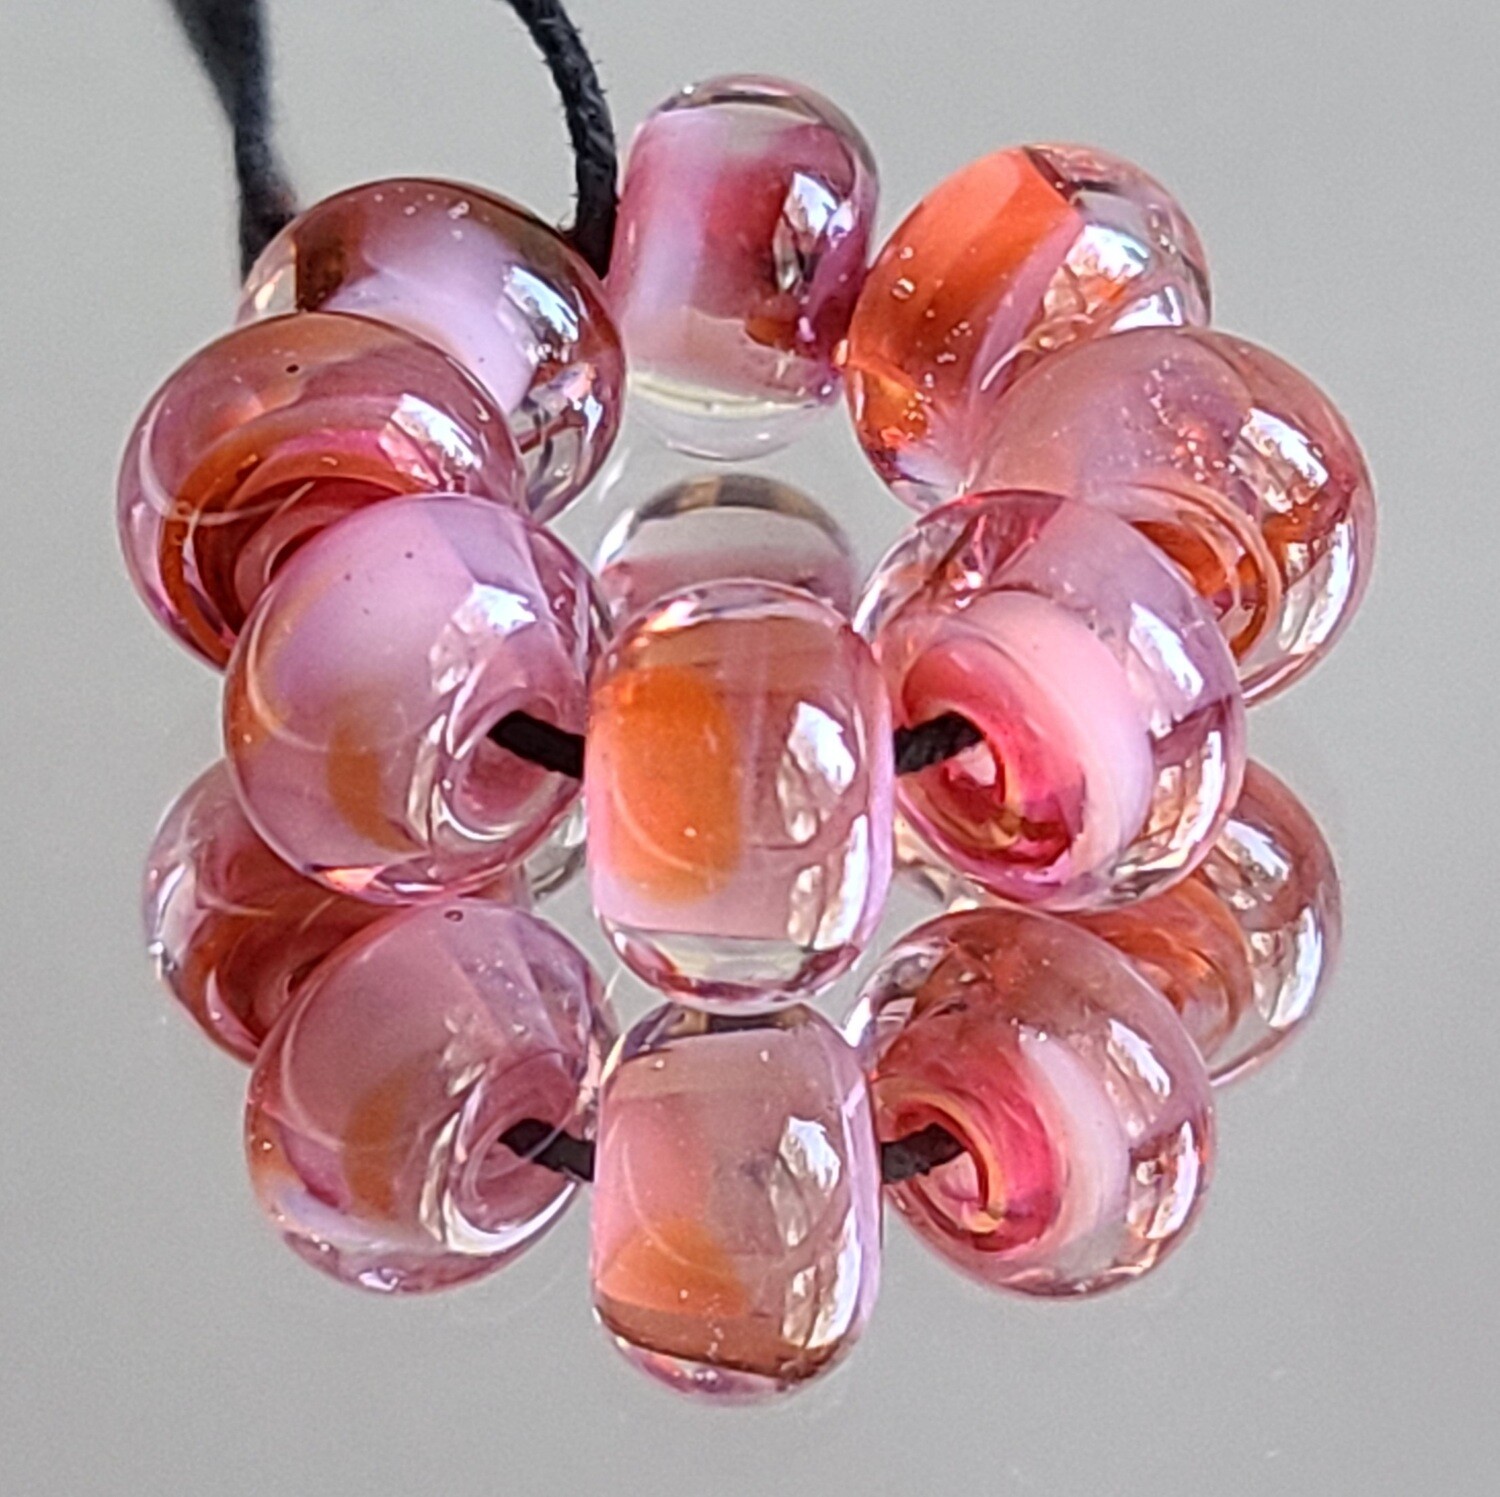 Apricot Nectar Handmade Lampwork Beads